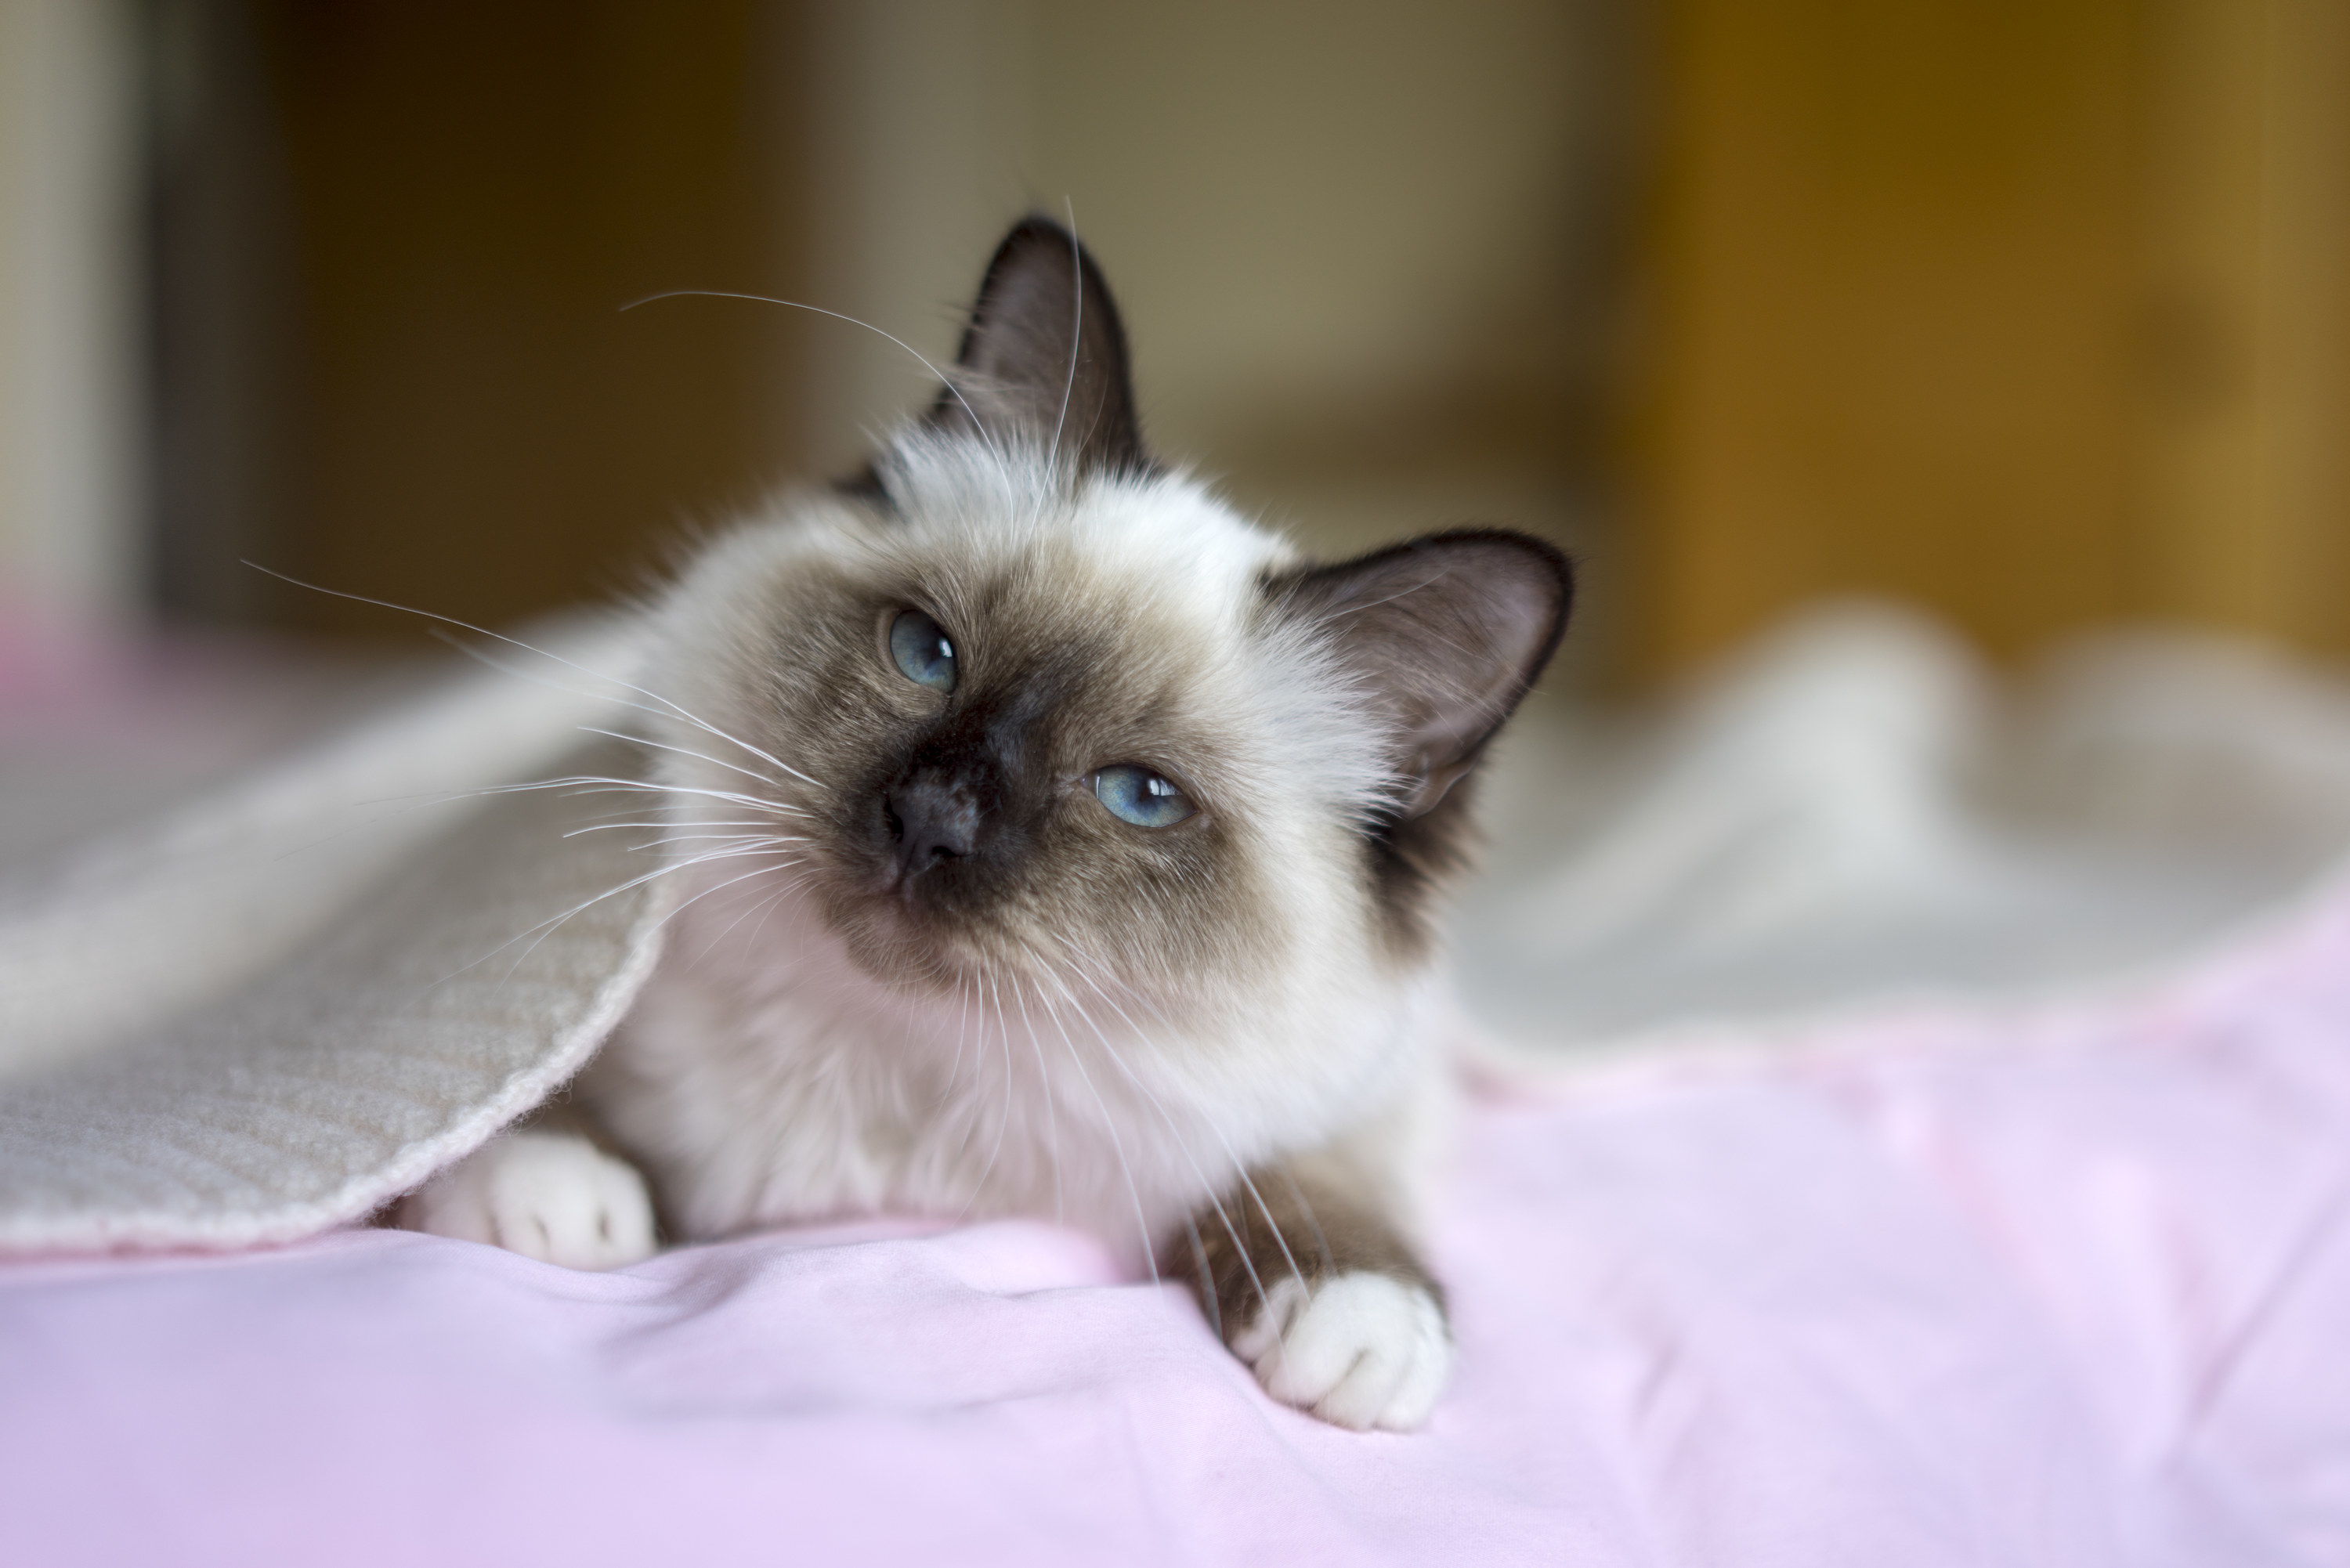 A very cute Birman cat with blue eyes hiding under a blanket